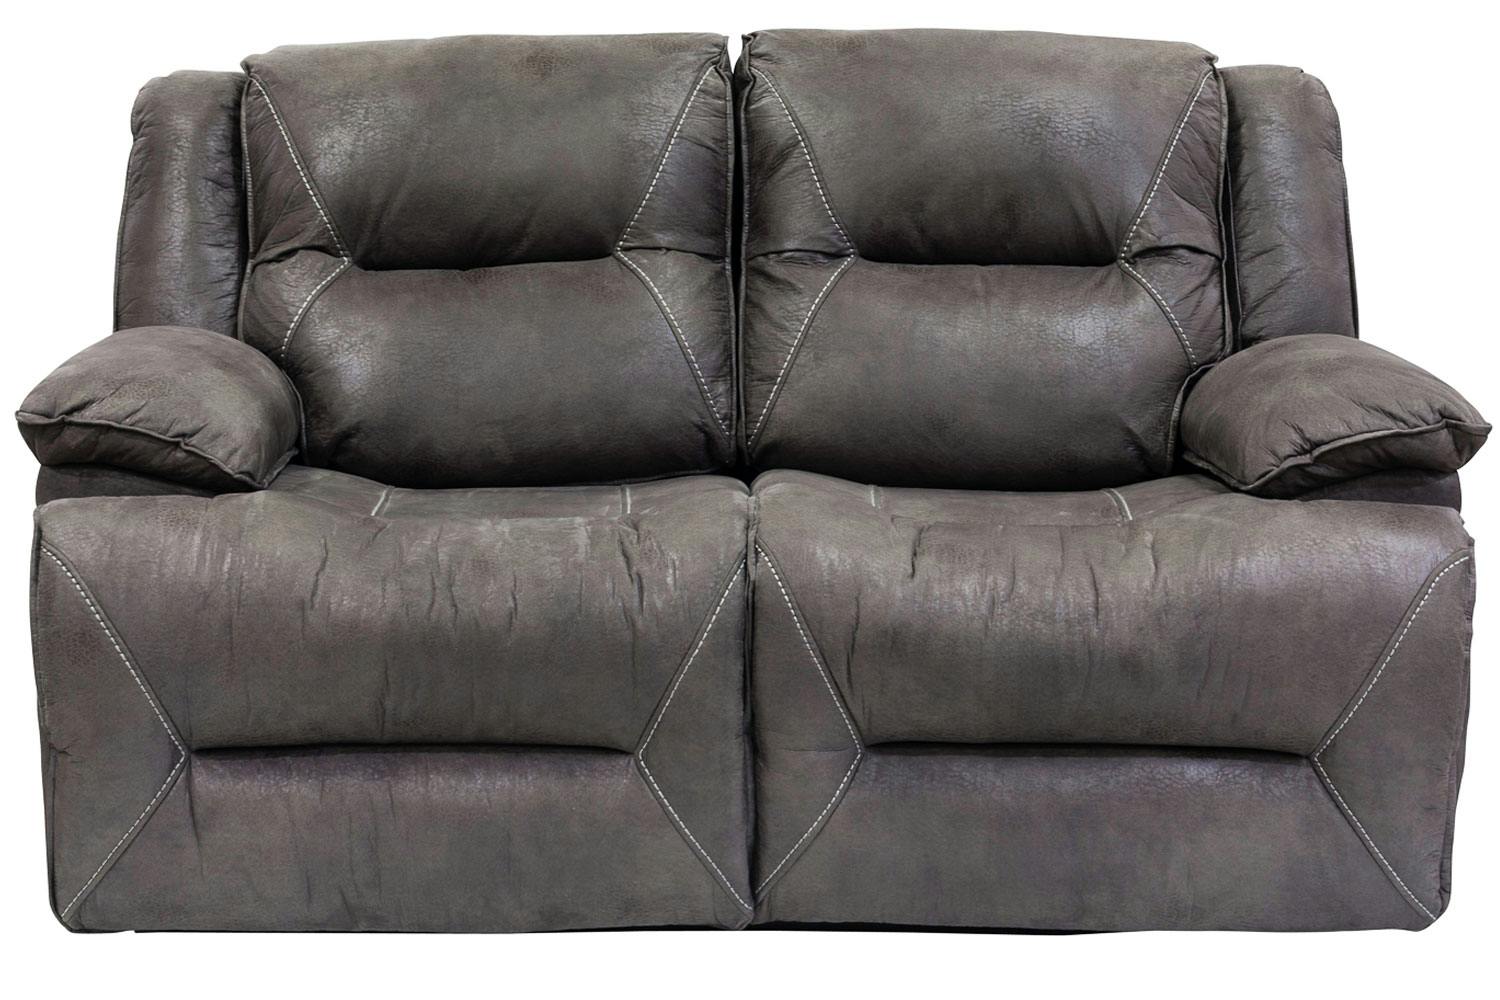 harvey norman 2 seater leather sofa